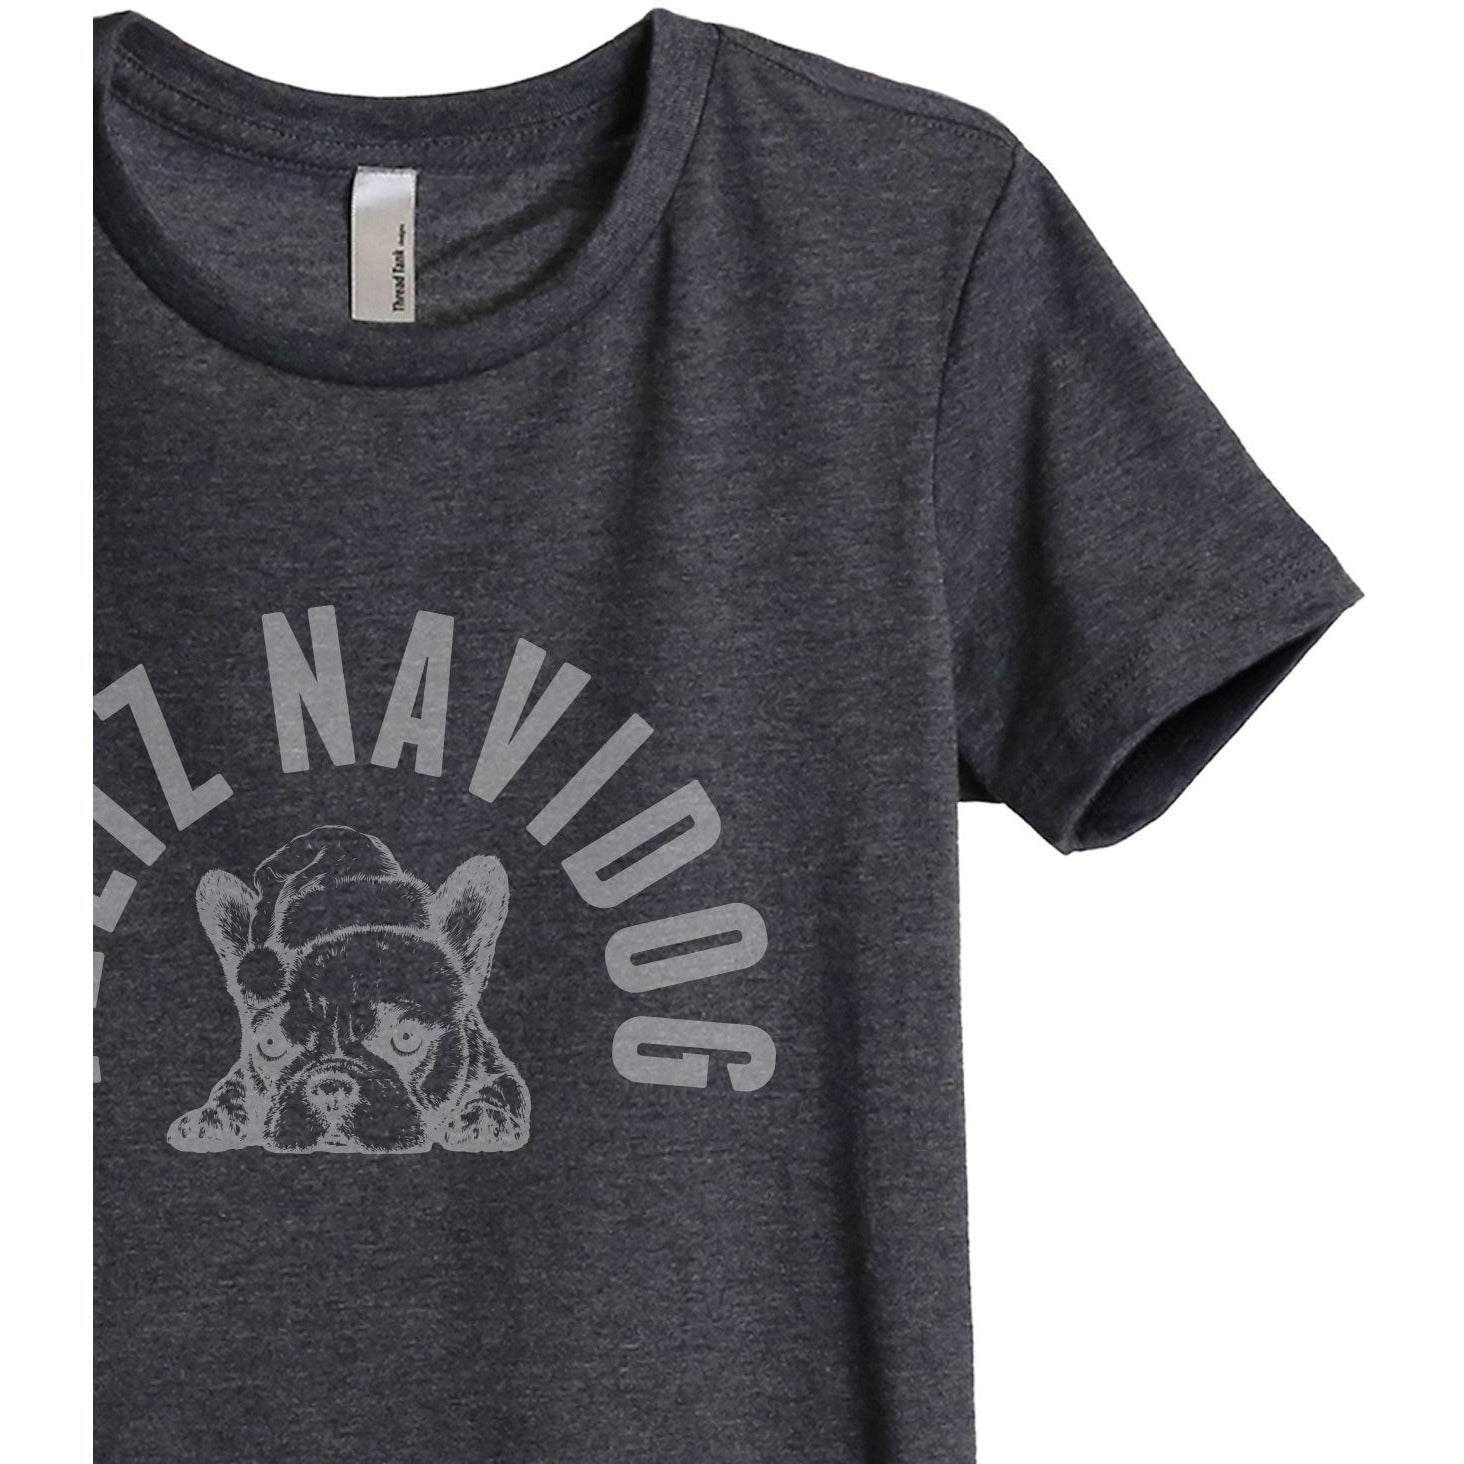 Feliz Navidog Women's Relaxed Crewneck T-Shirt Top Tee Charcoal Grey Zoom Details